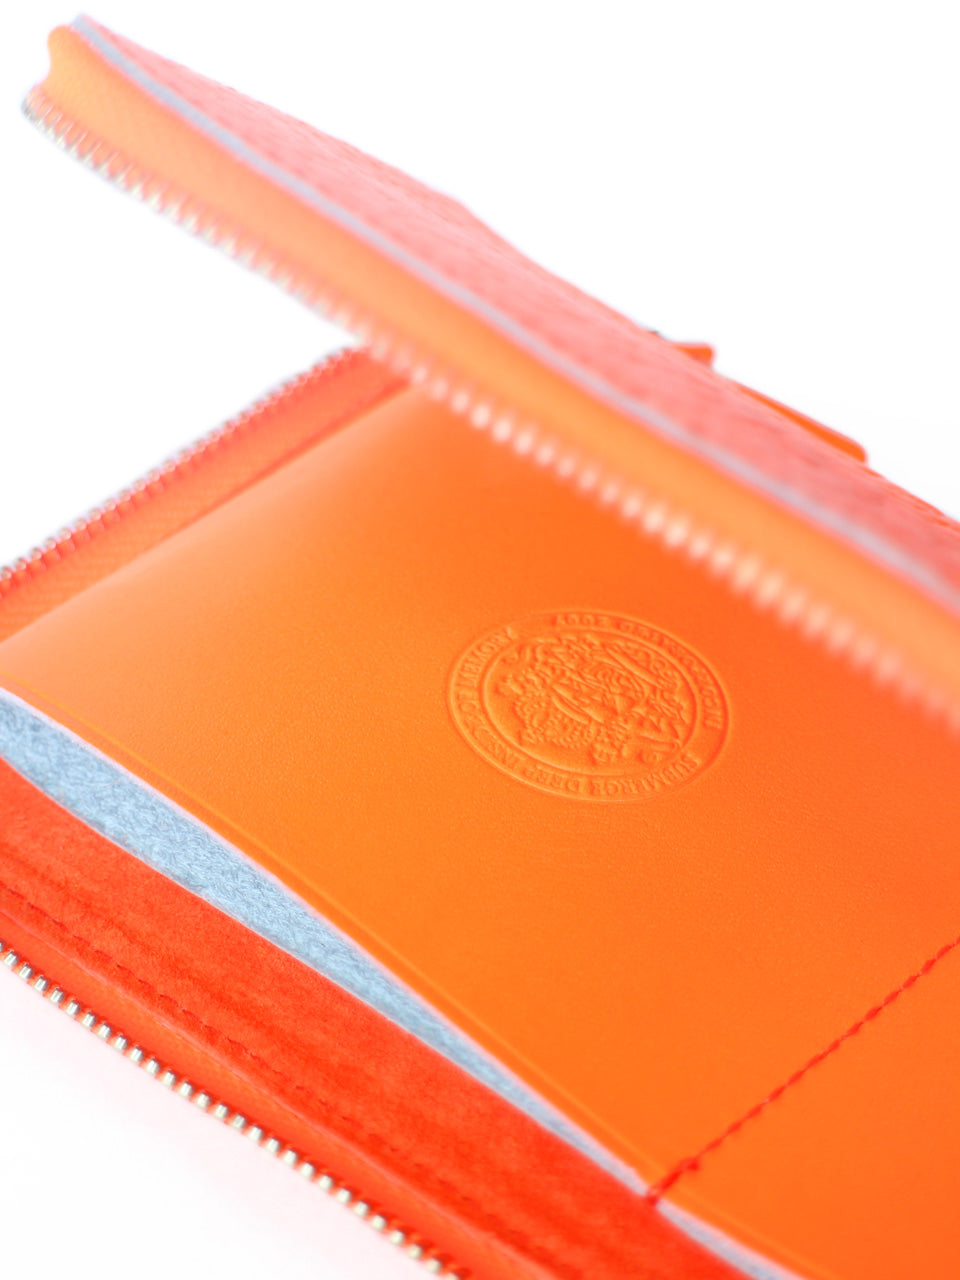 BAL/PORTER® Thin Leather Wallet (orange)